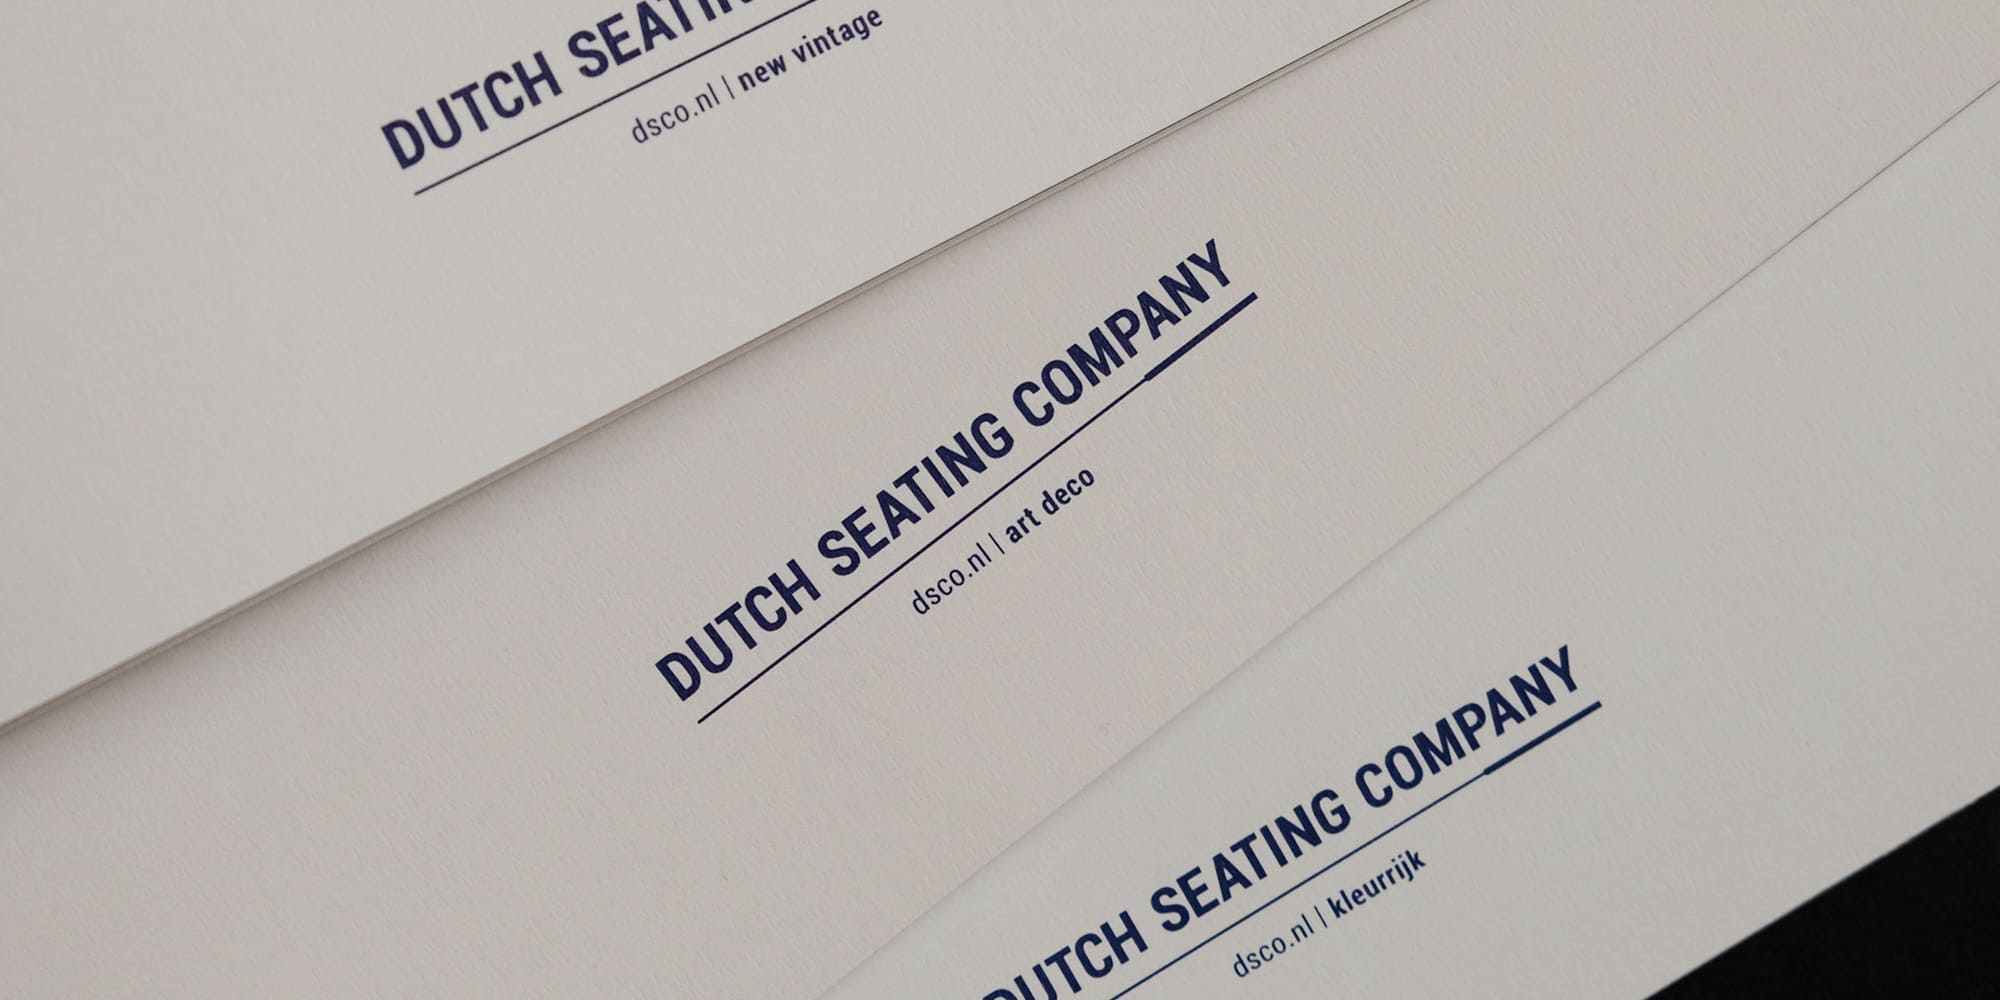 Dutch Seating Company Print